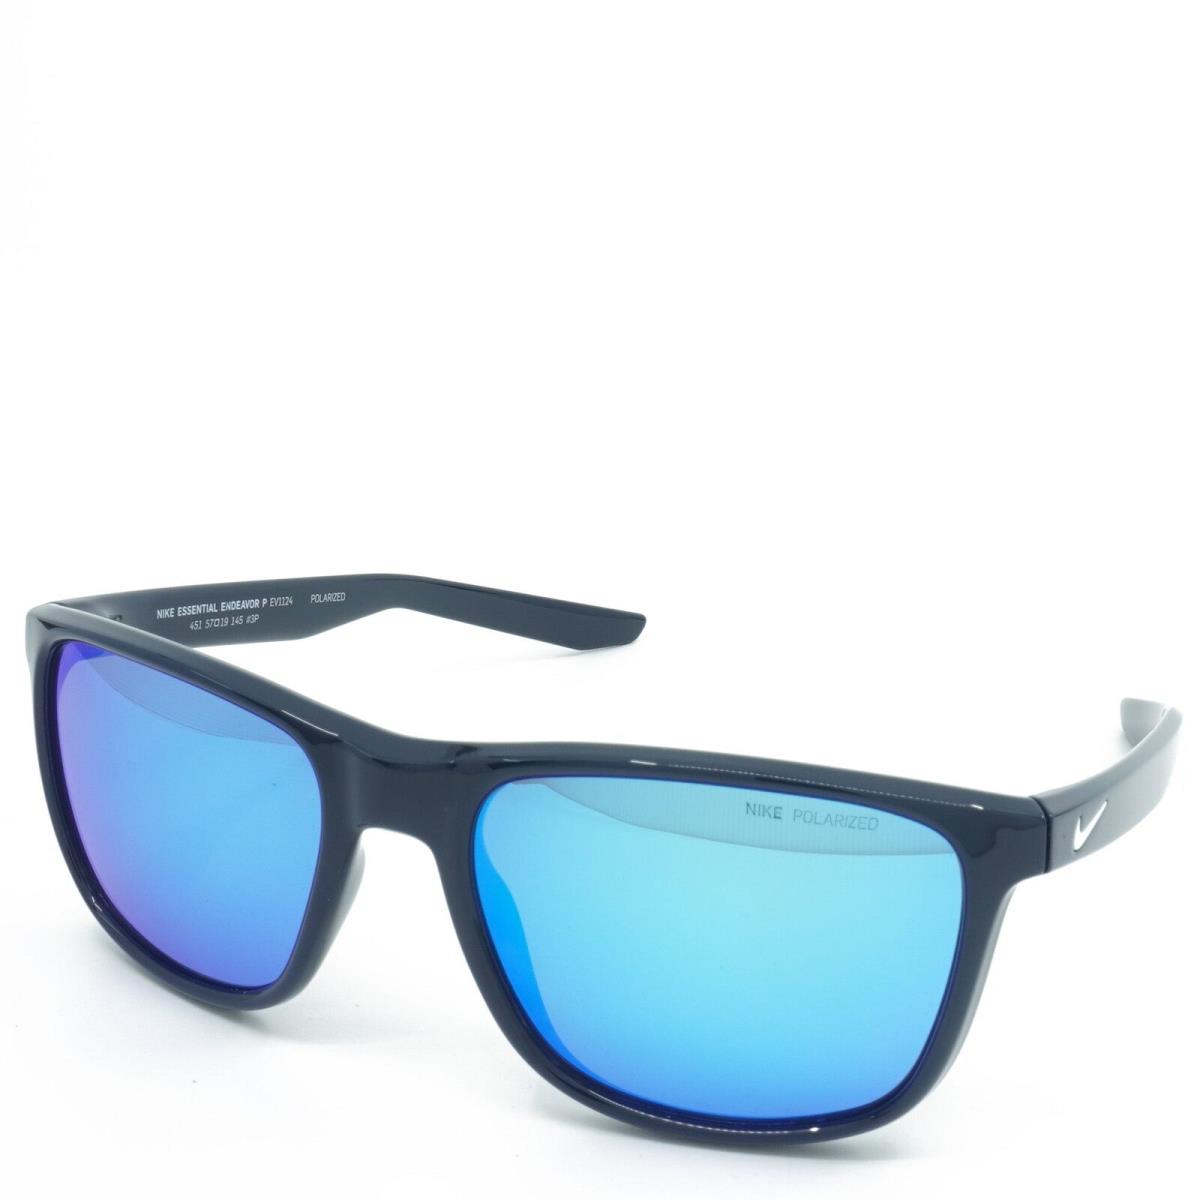 EV1124-451 Mens Nike Essential Endeavor P MI Polarized Sunglasses